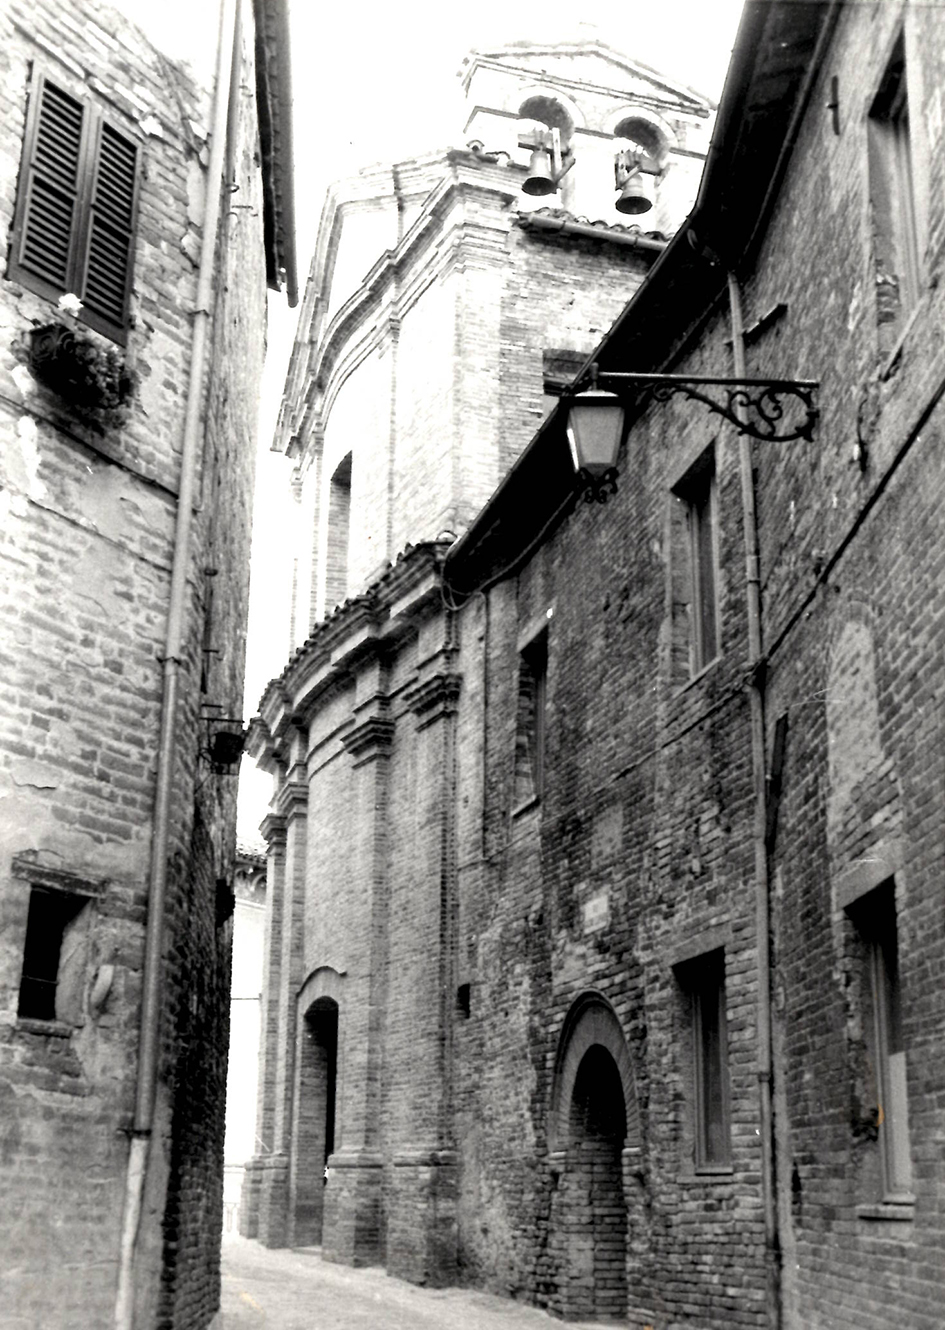 Monastero di S. Chiara (convento, francescano) - Sarnano (MC) 